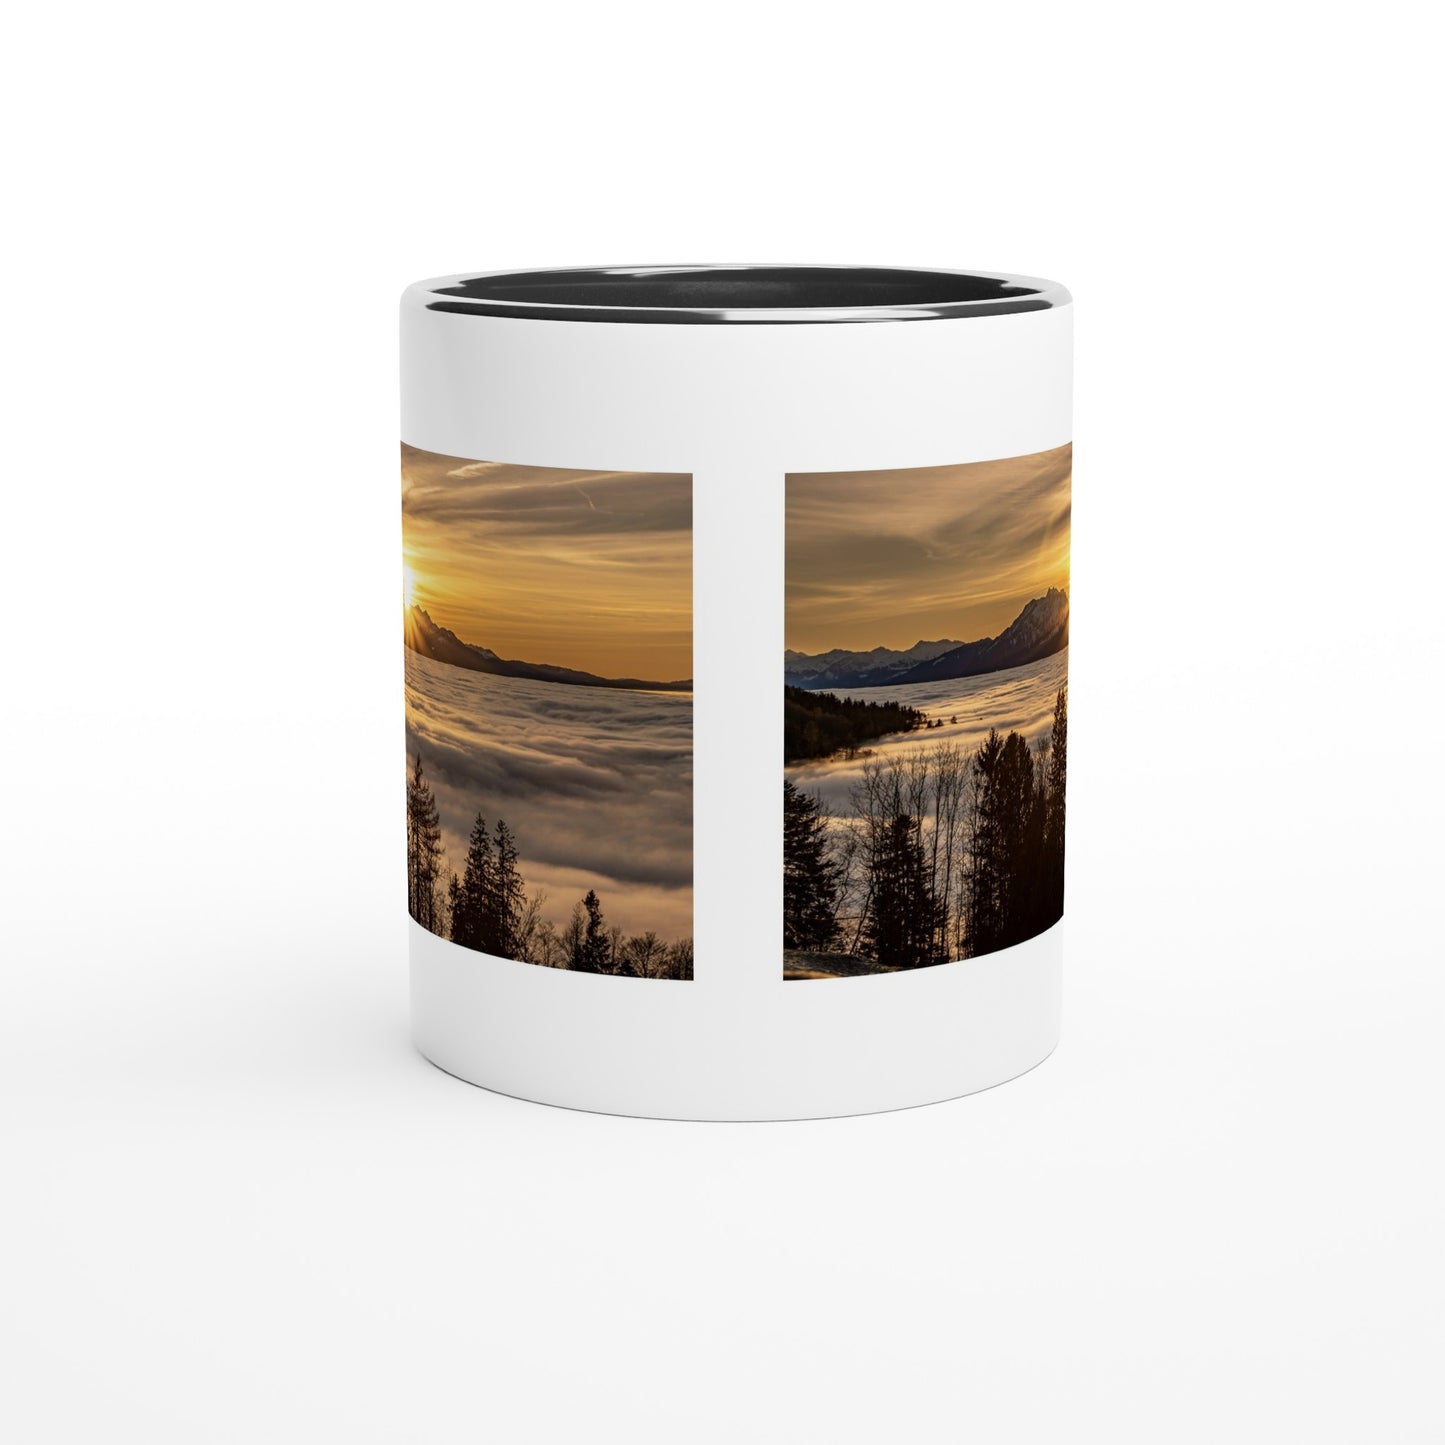 Nebelmeer Sonnenuntergang Keramiktasse - Verschiedene Farben